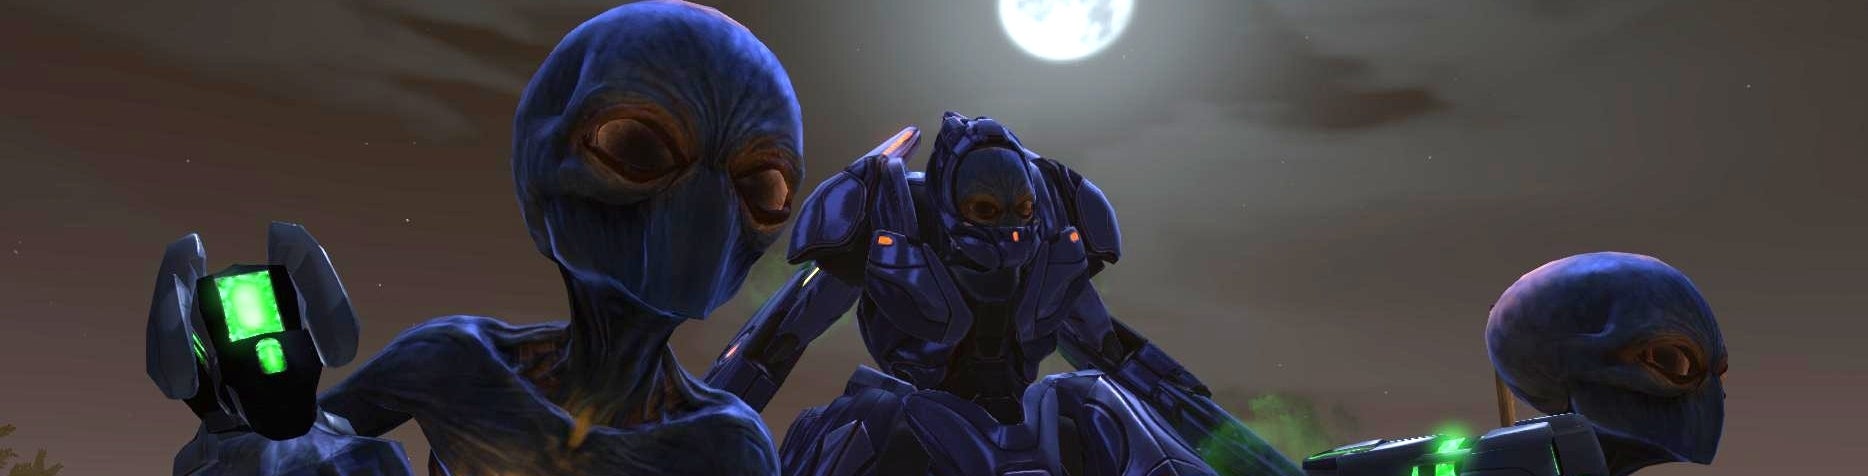 Image for PREVIEW XCOM: Enemy Within a první obrázky